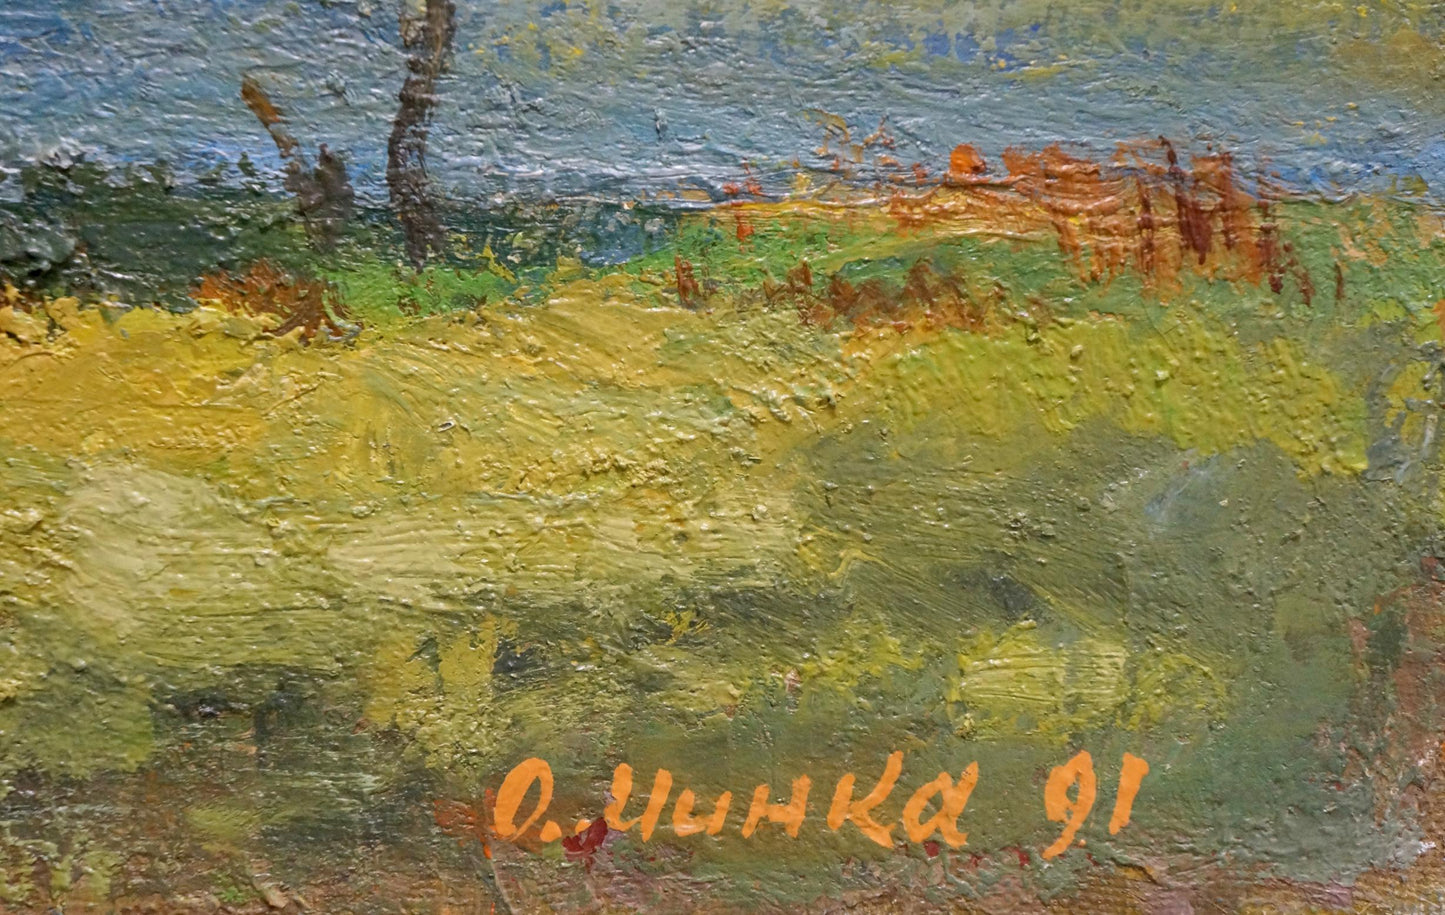 Oil painting Autumn beauty Mynka Alexander Fedorovich